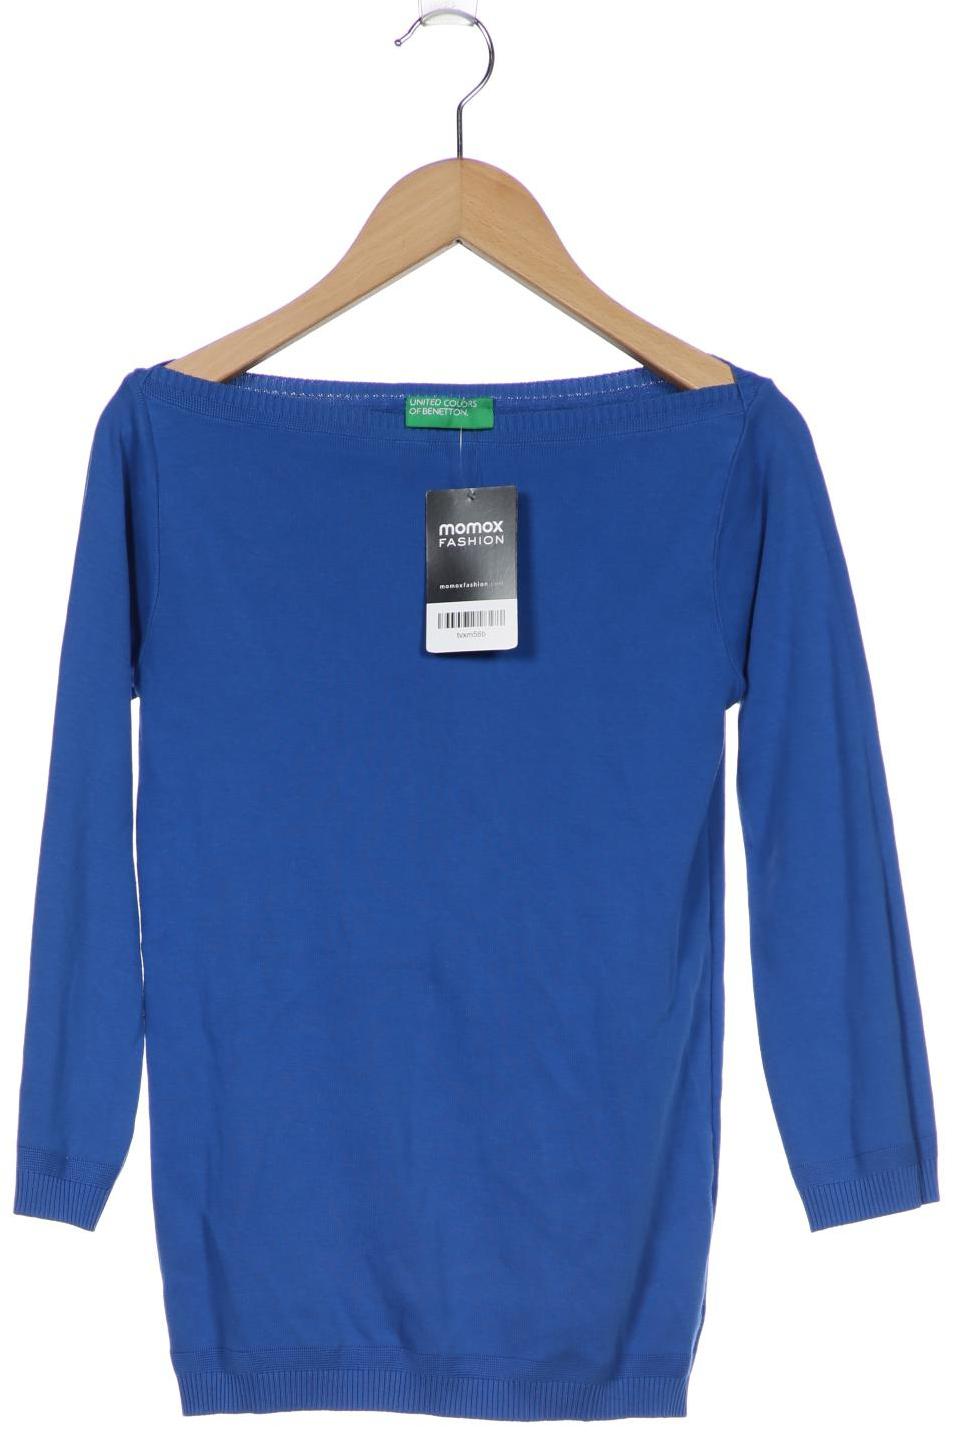 UNITED COLORS OF BENETTON Damen Pullover, blau von United Colors of Benetton